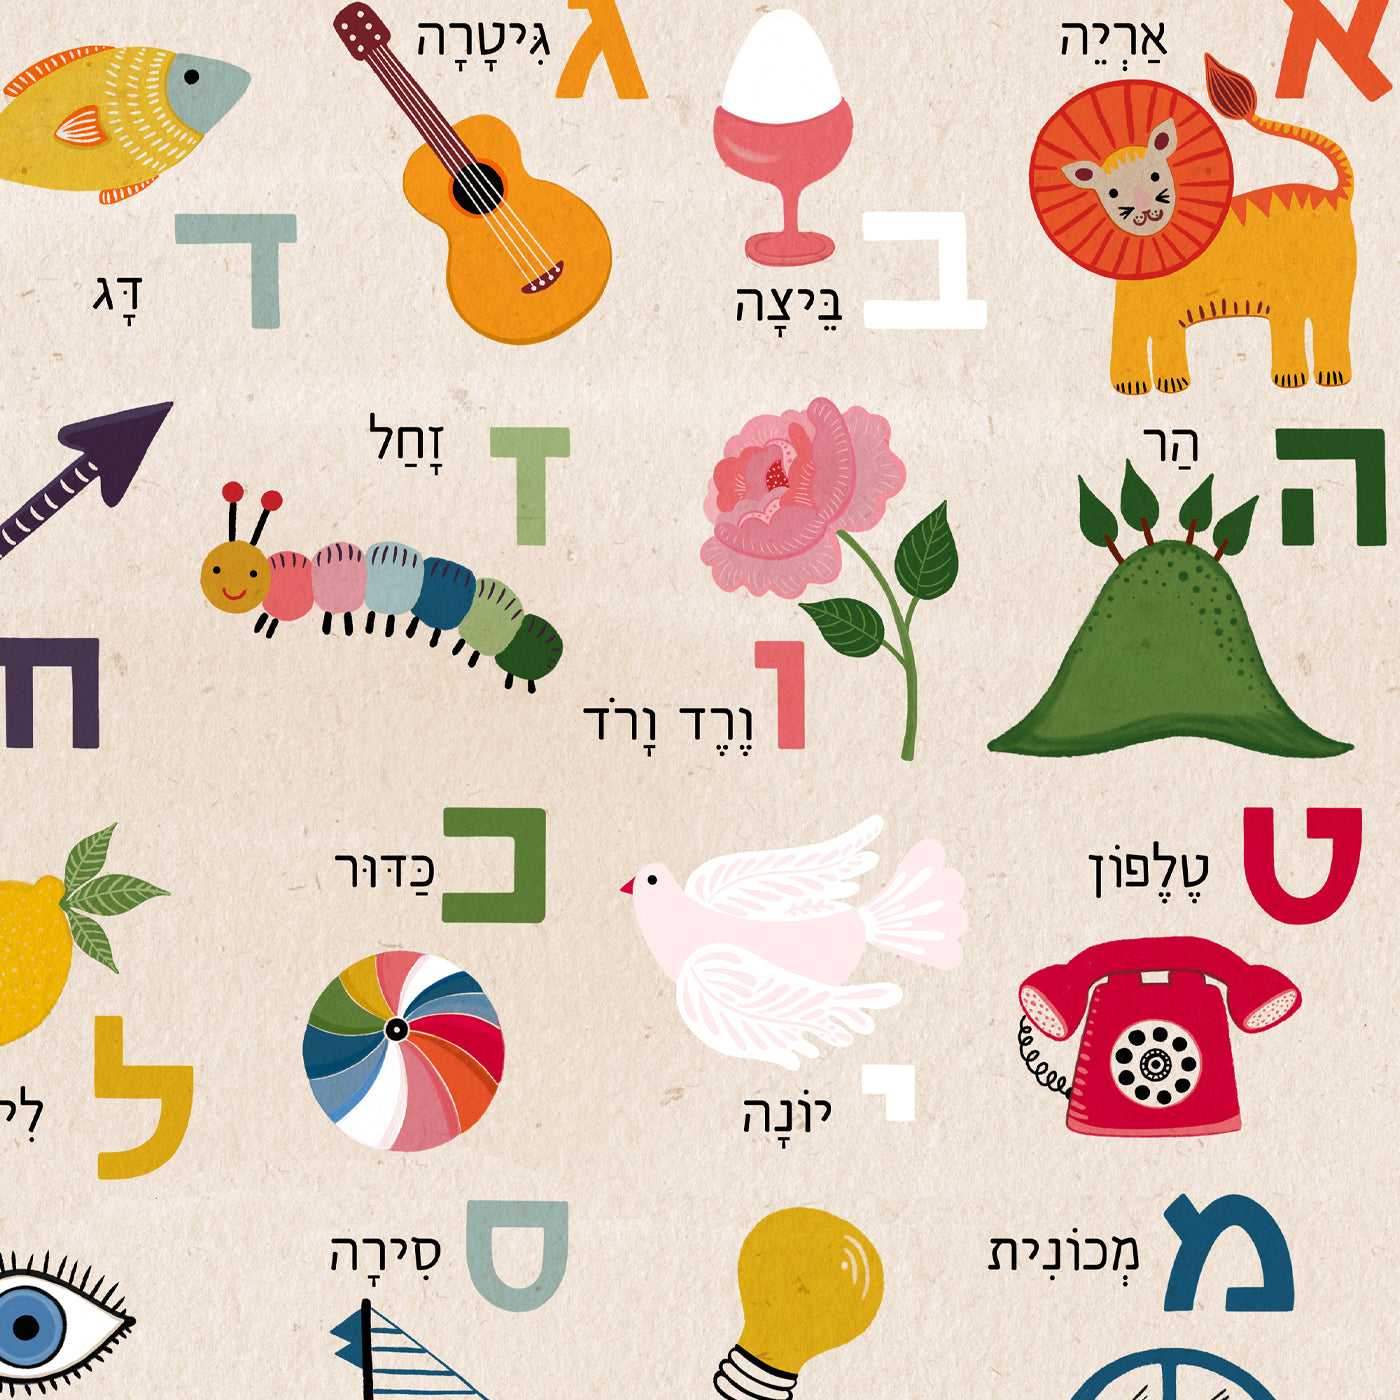 Hebrew Alphabet Poster - Alef Bet Art Print